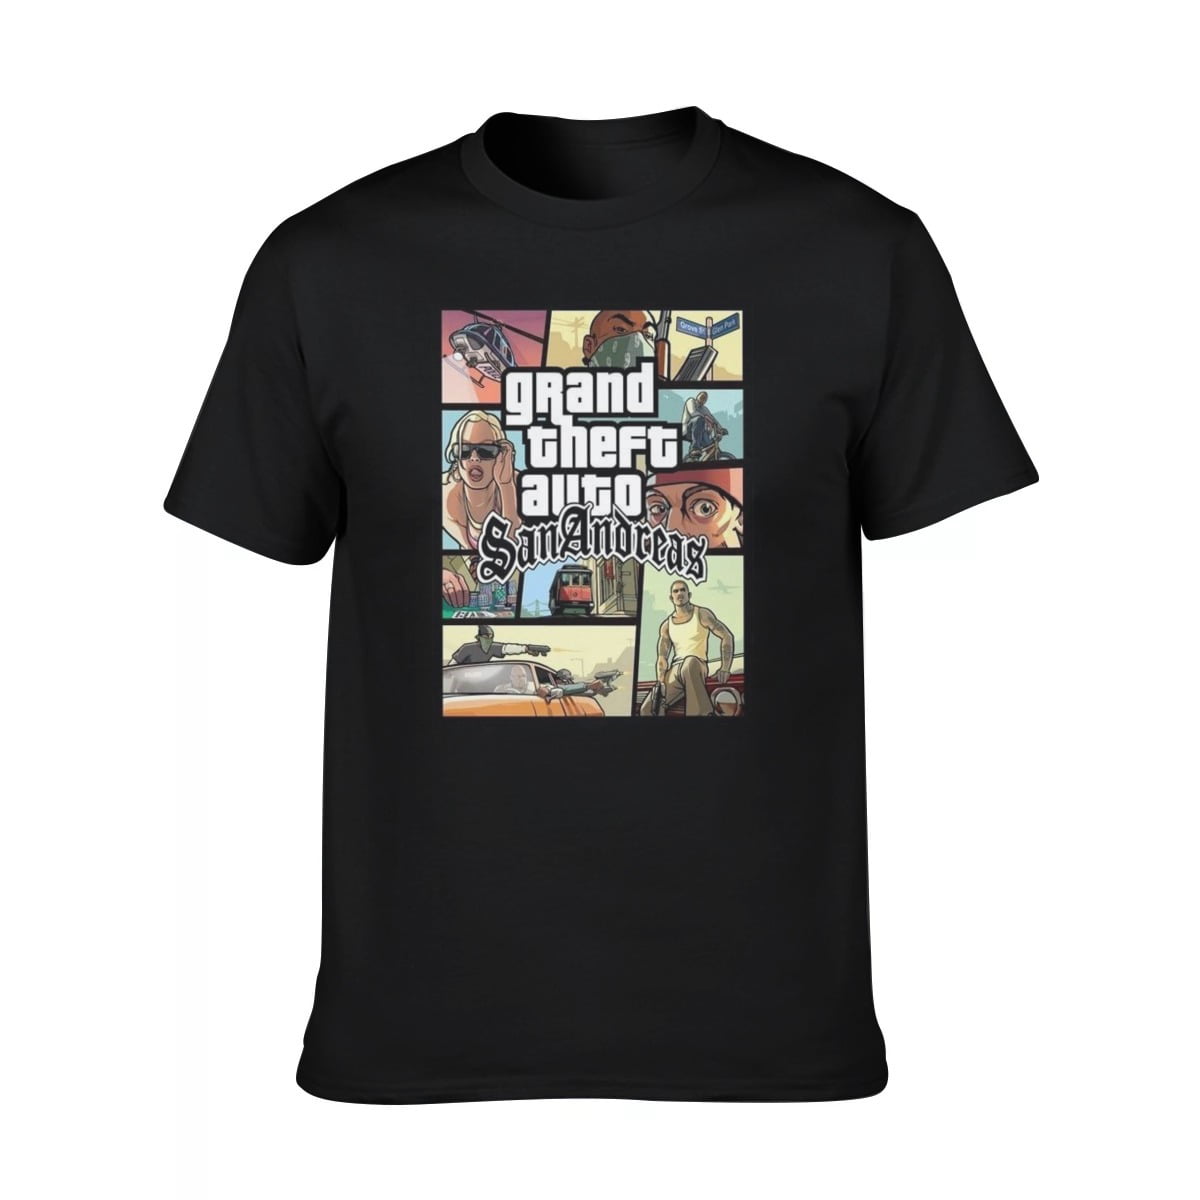 Buy Grand Theft Auto: San Andreas Black Tee